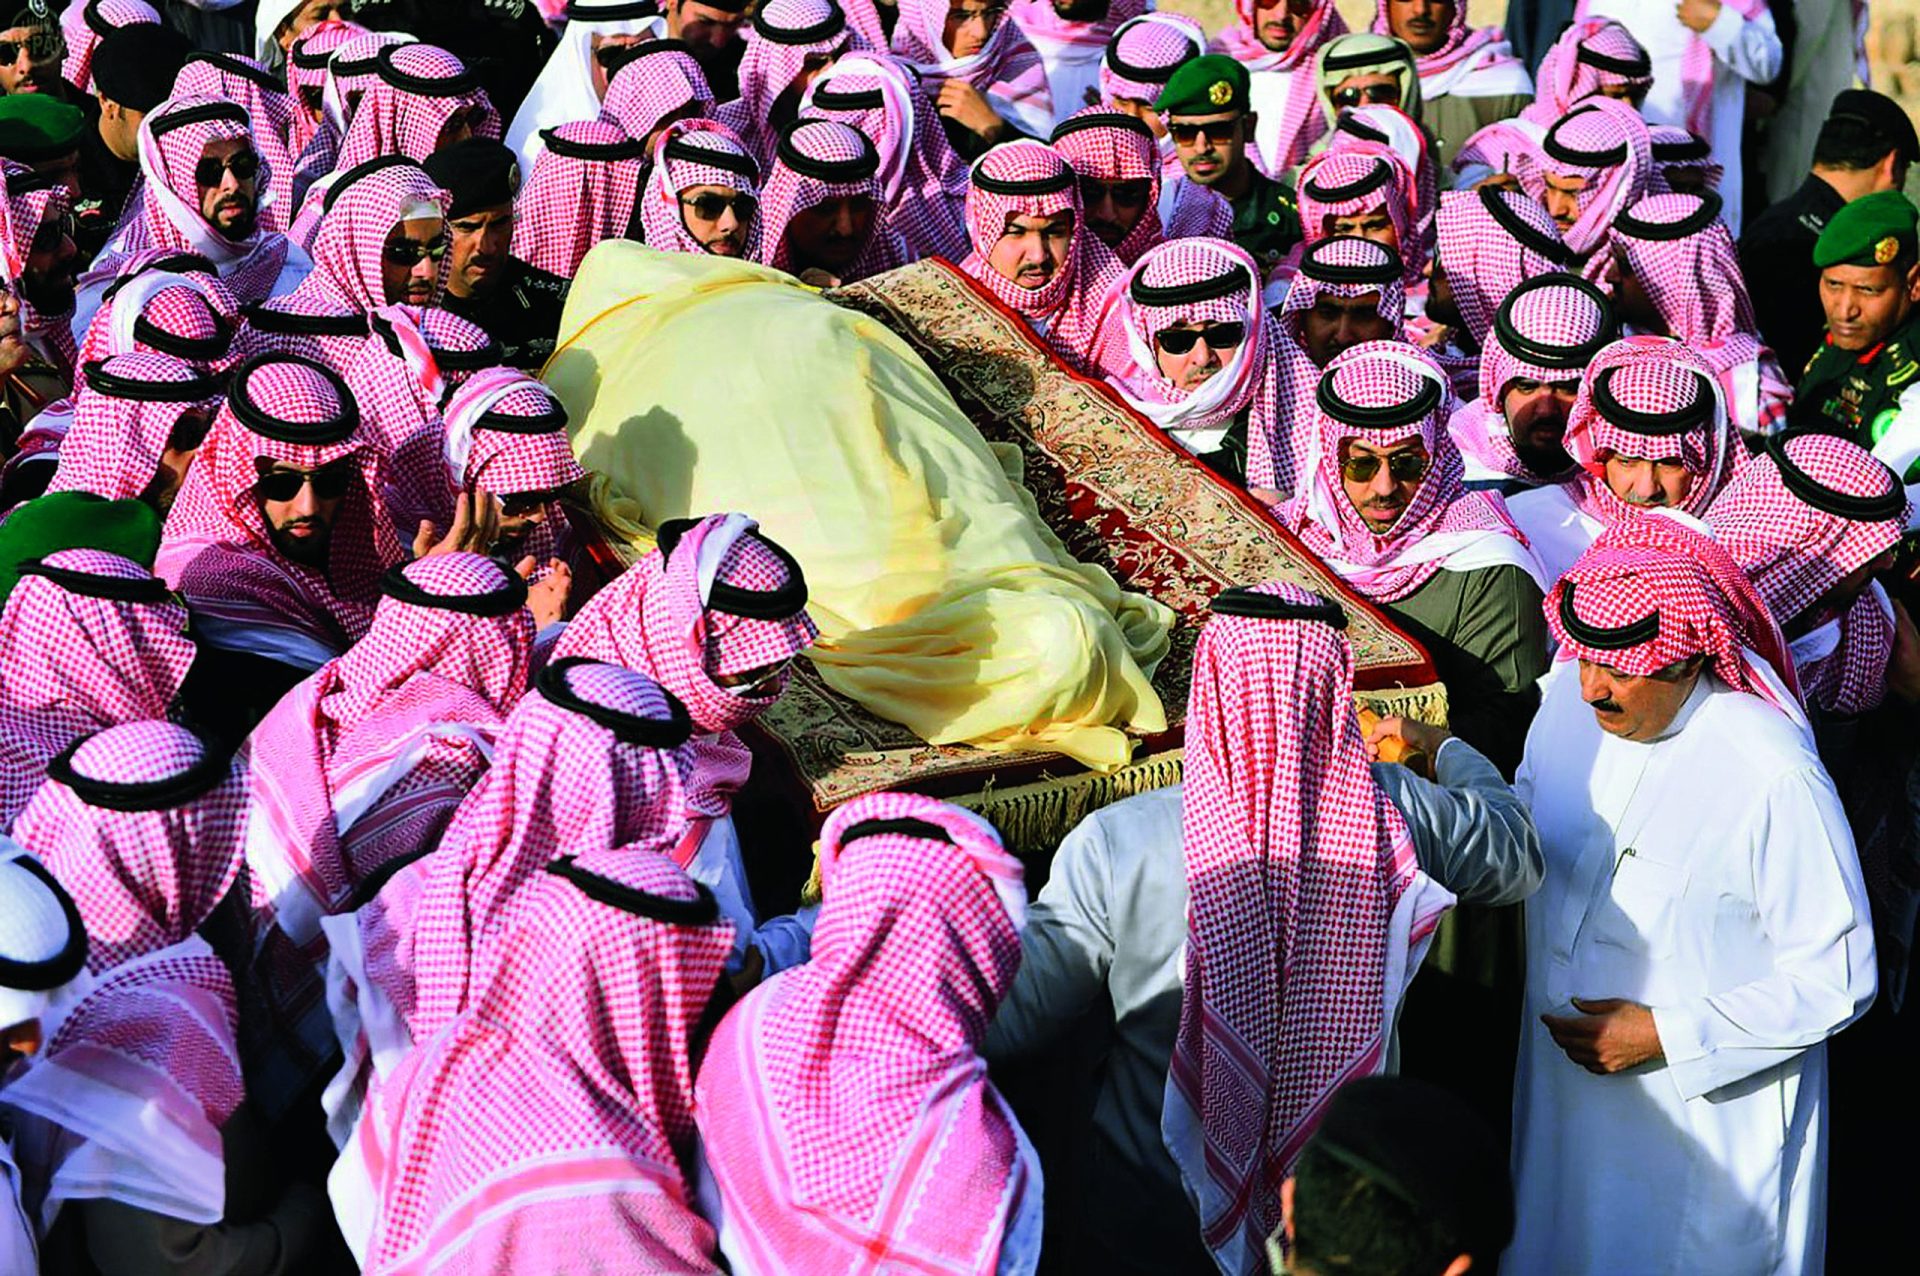 Arábia Saudita, o aliado extremista